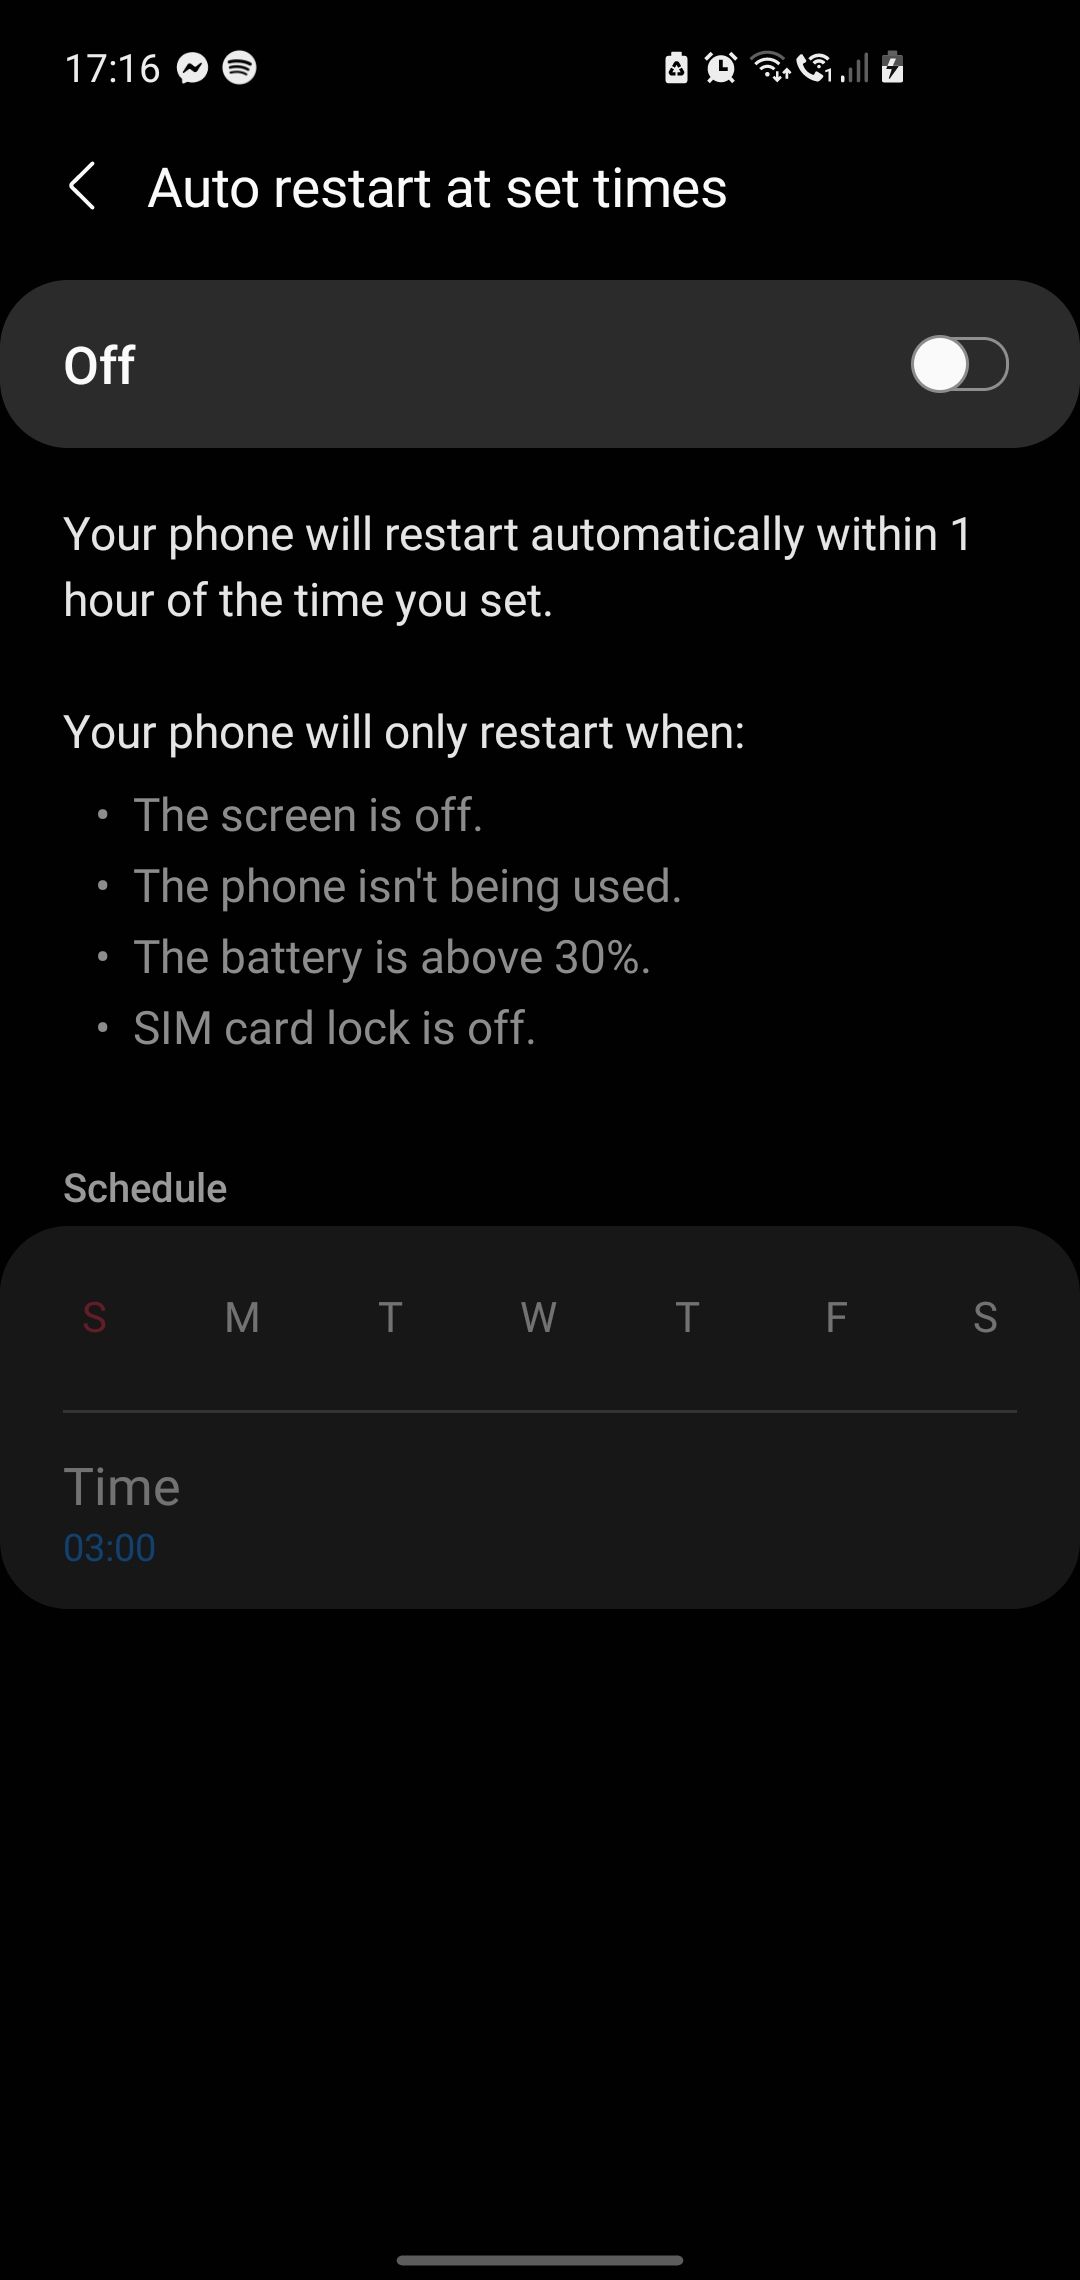 De ce mi se stinge telefonul singur? - Samsung Community